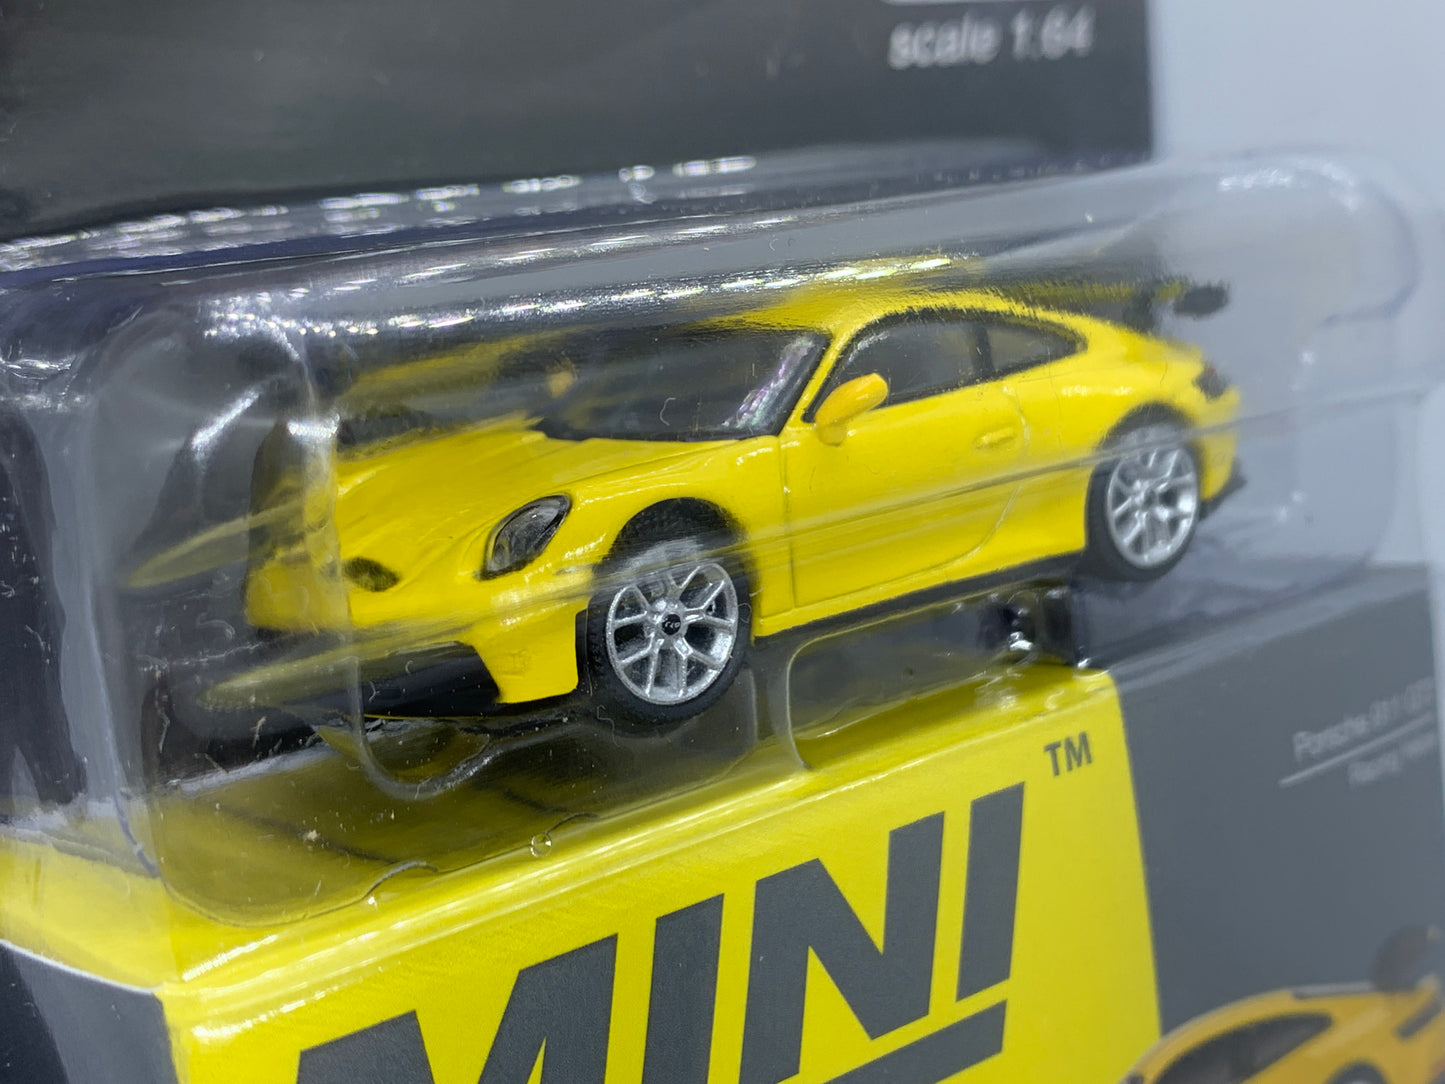 MINI GT - Porsche 911 GT3 Racing Yellow - Display Blister Packaging